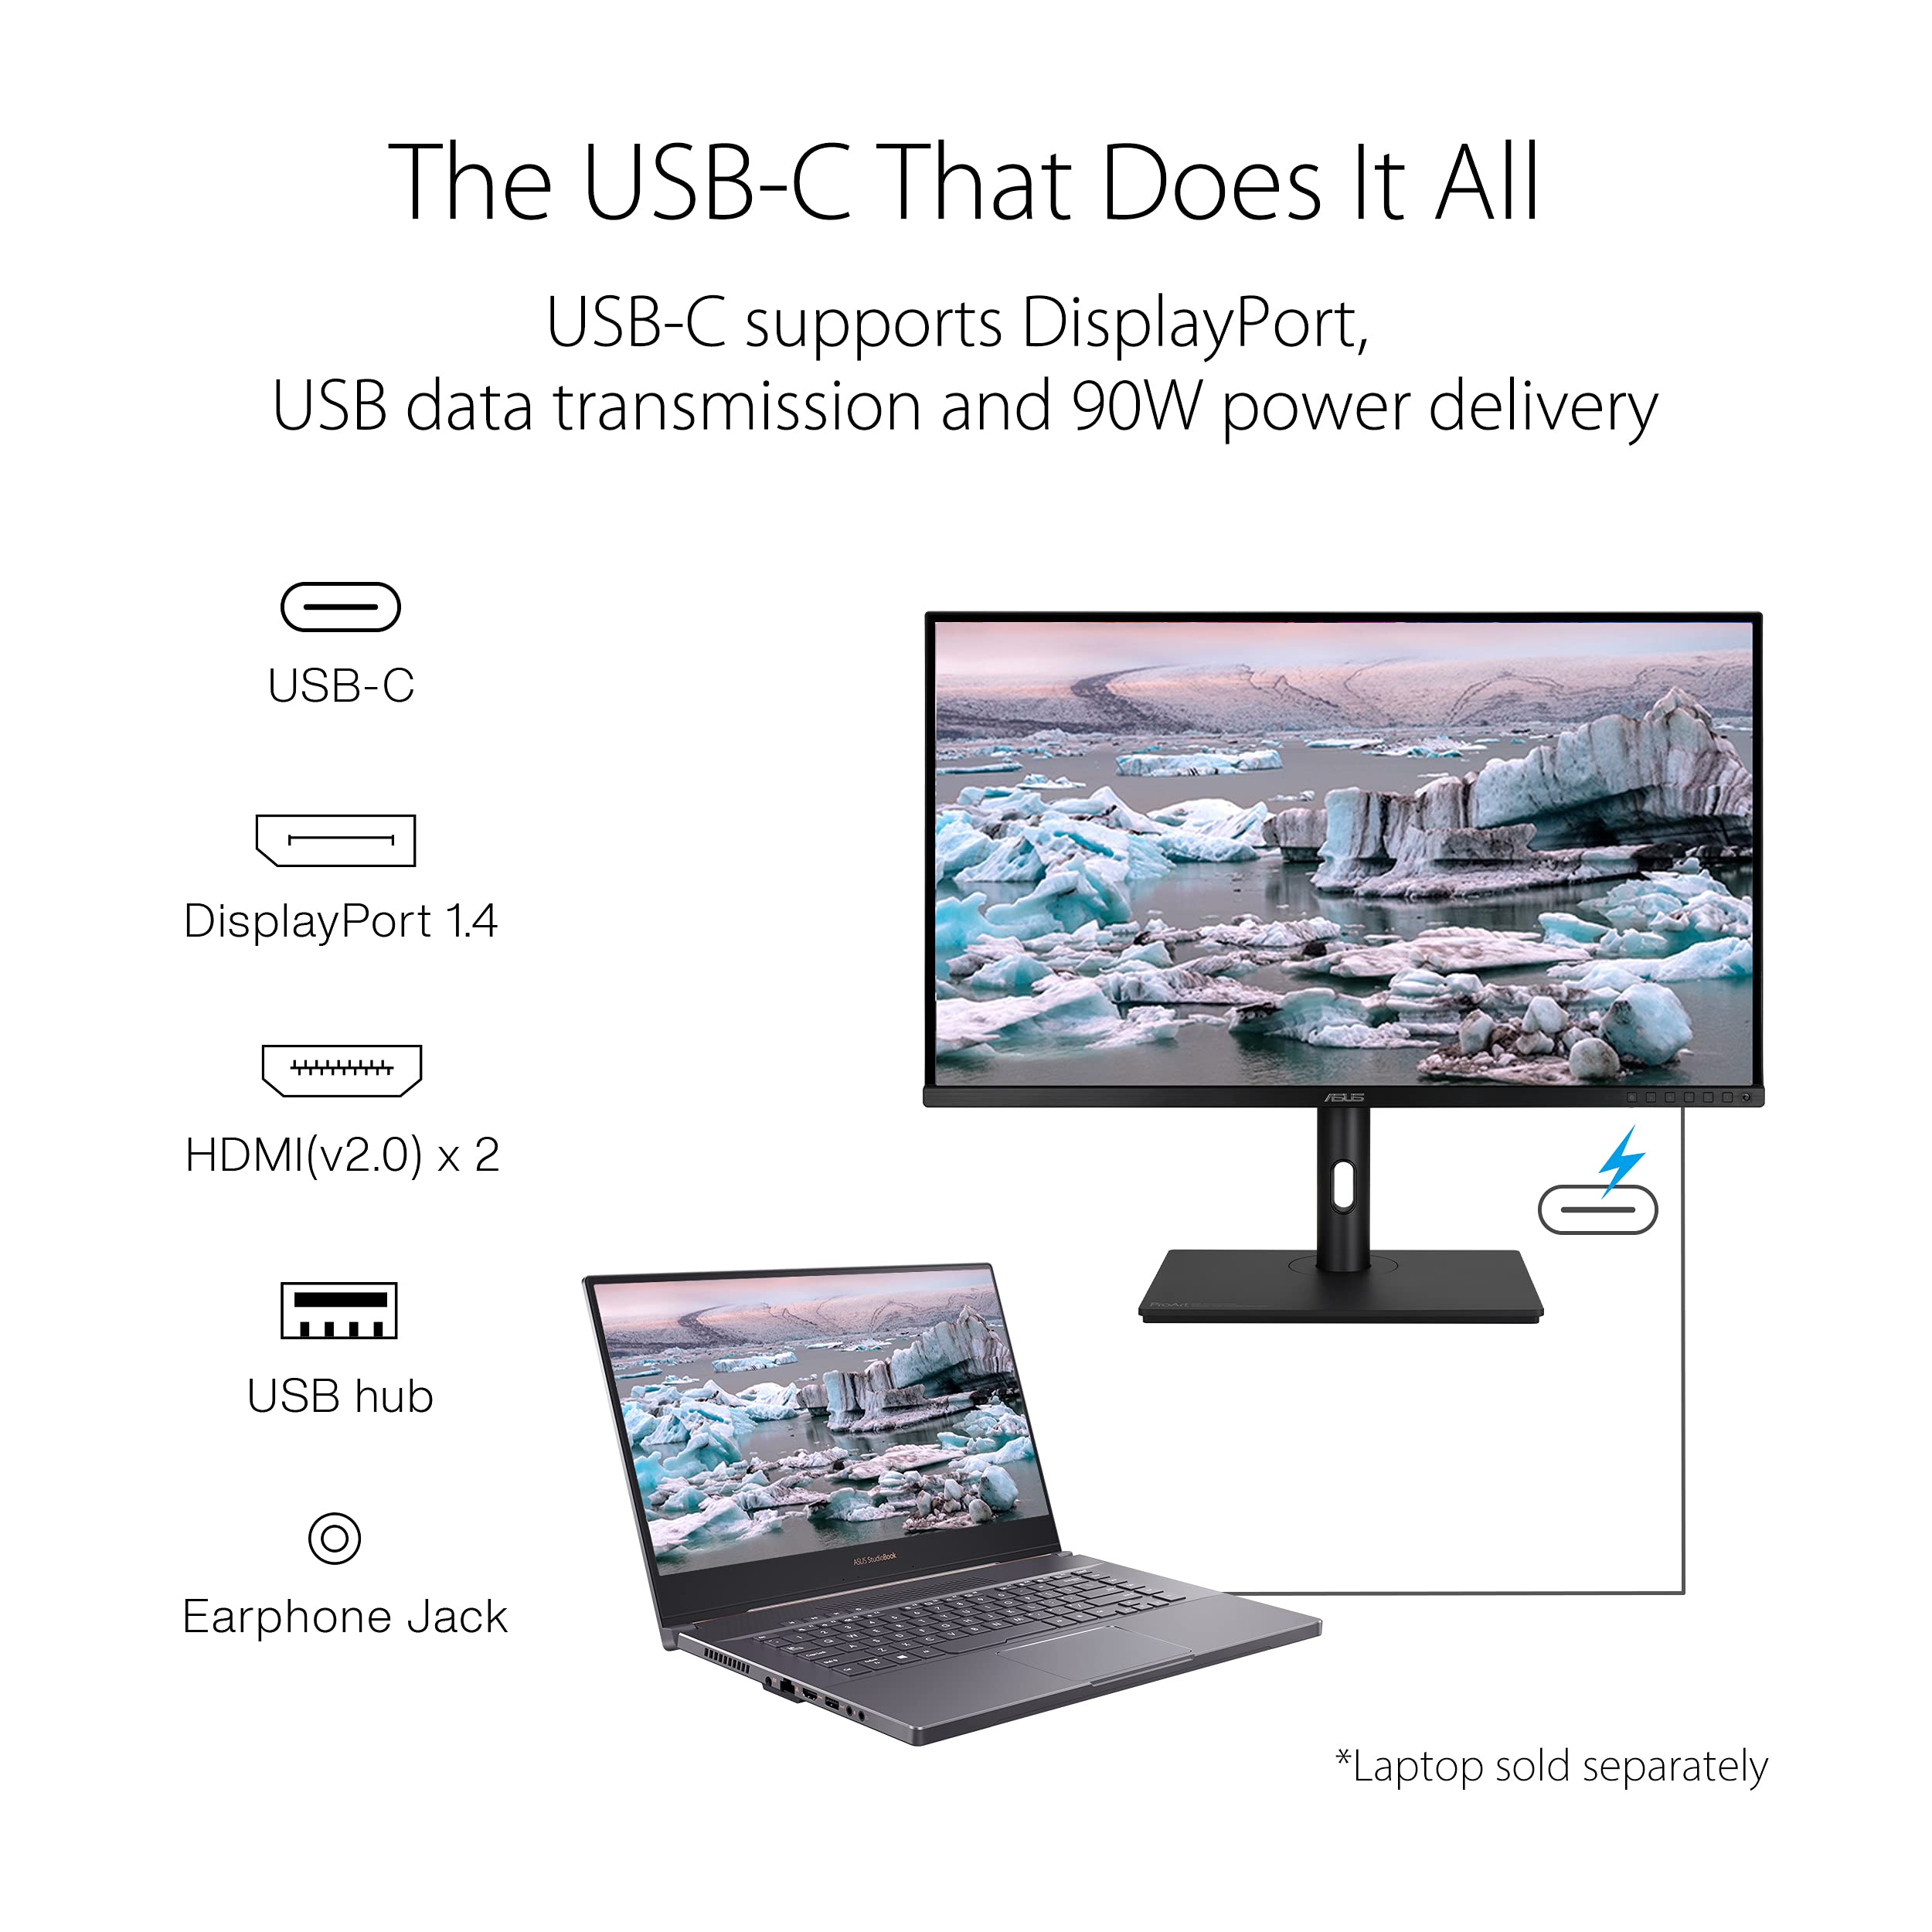 ASUS ProArt Display 32” 4K HDR Computer Monitor (PA329CV) - IPS, 100% sRGB/Rec.709, ΔE2, Calman Verified, USB-C Power Delivery, HDMI, USB 3.1 Hub, C-clamp, Compatible with Laptop & Mac Monitor, BLACK